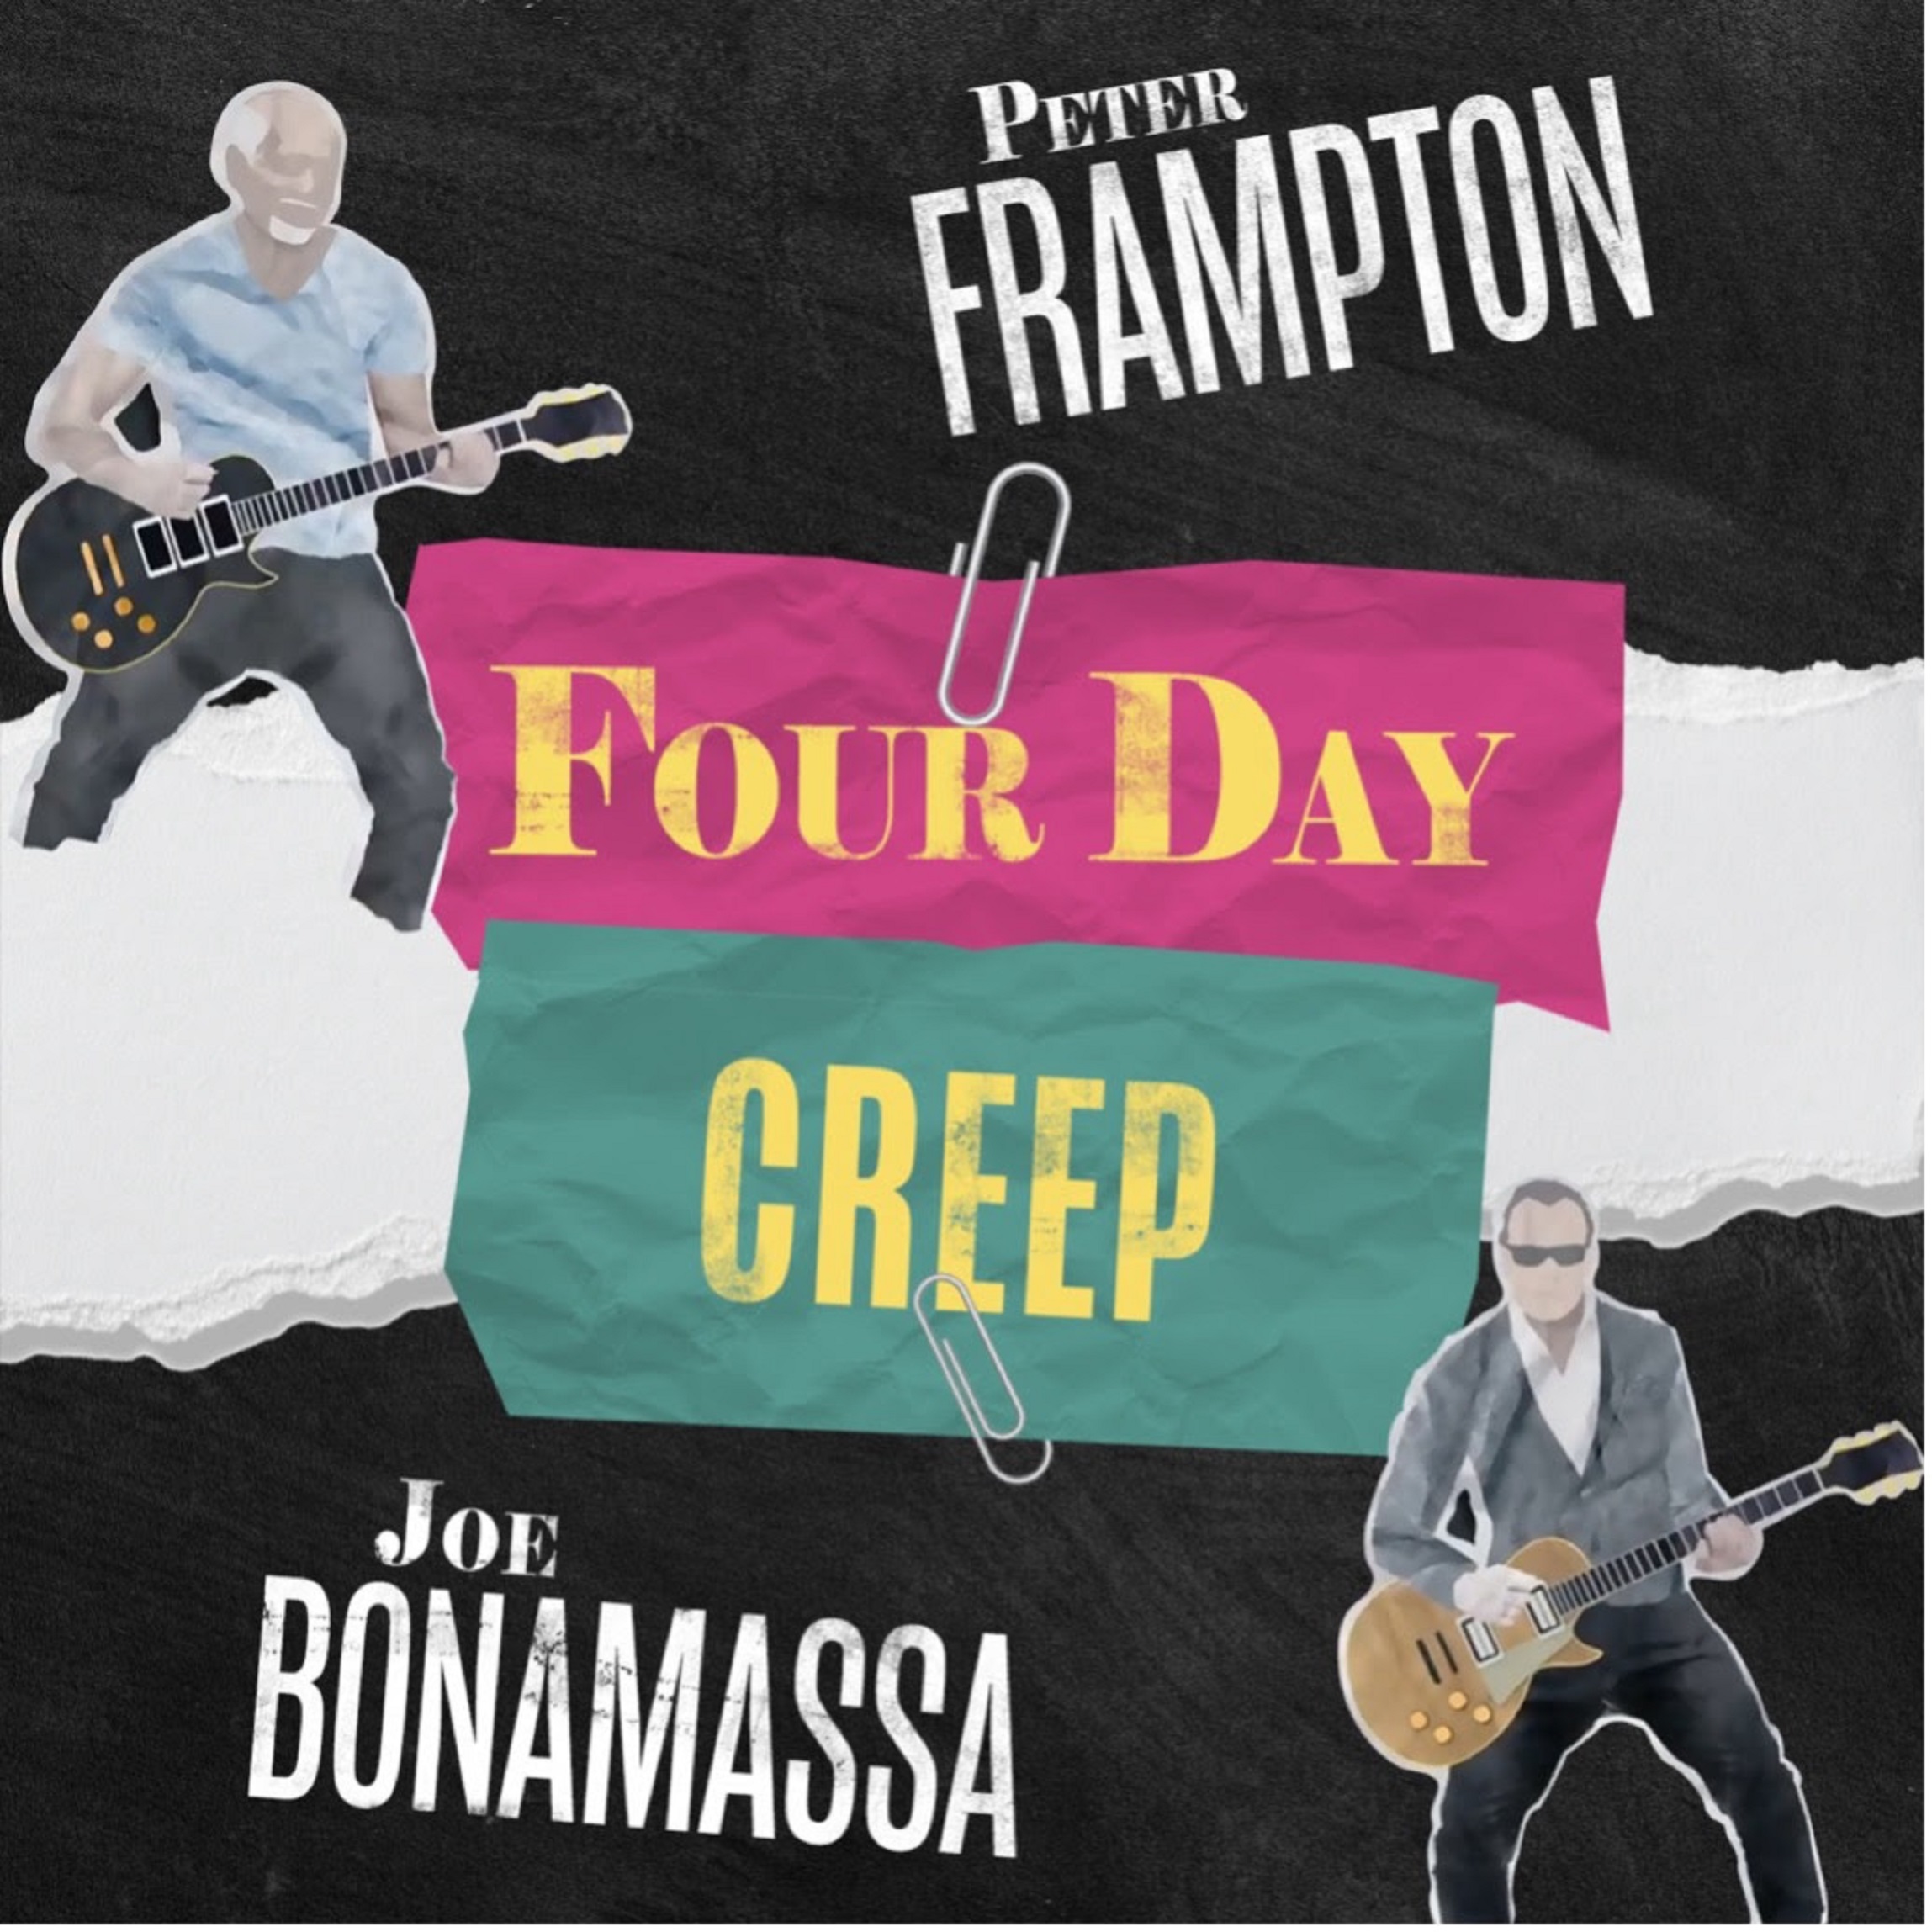 Peter Frampton, Joe Bonamassa Revitalize Humble Pie Classic, “Four Day Creep"